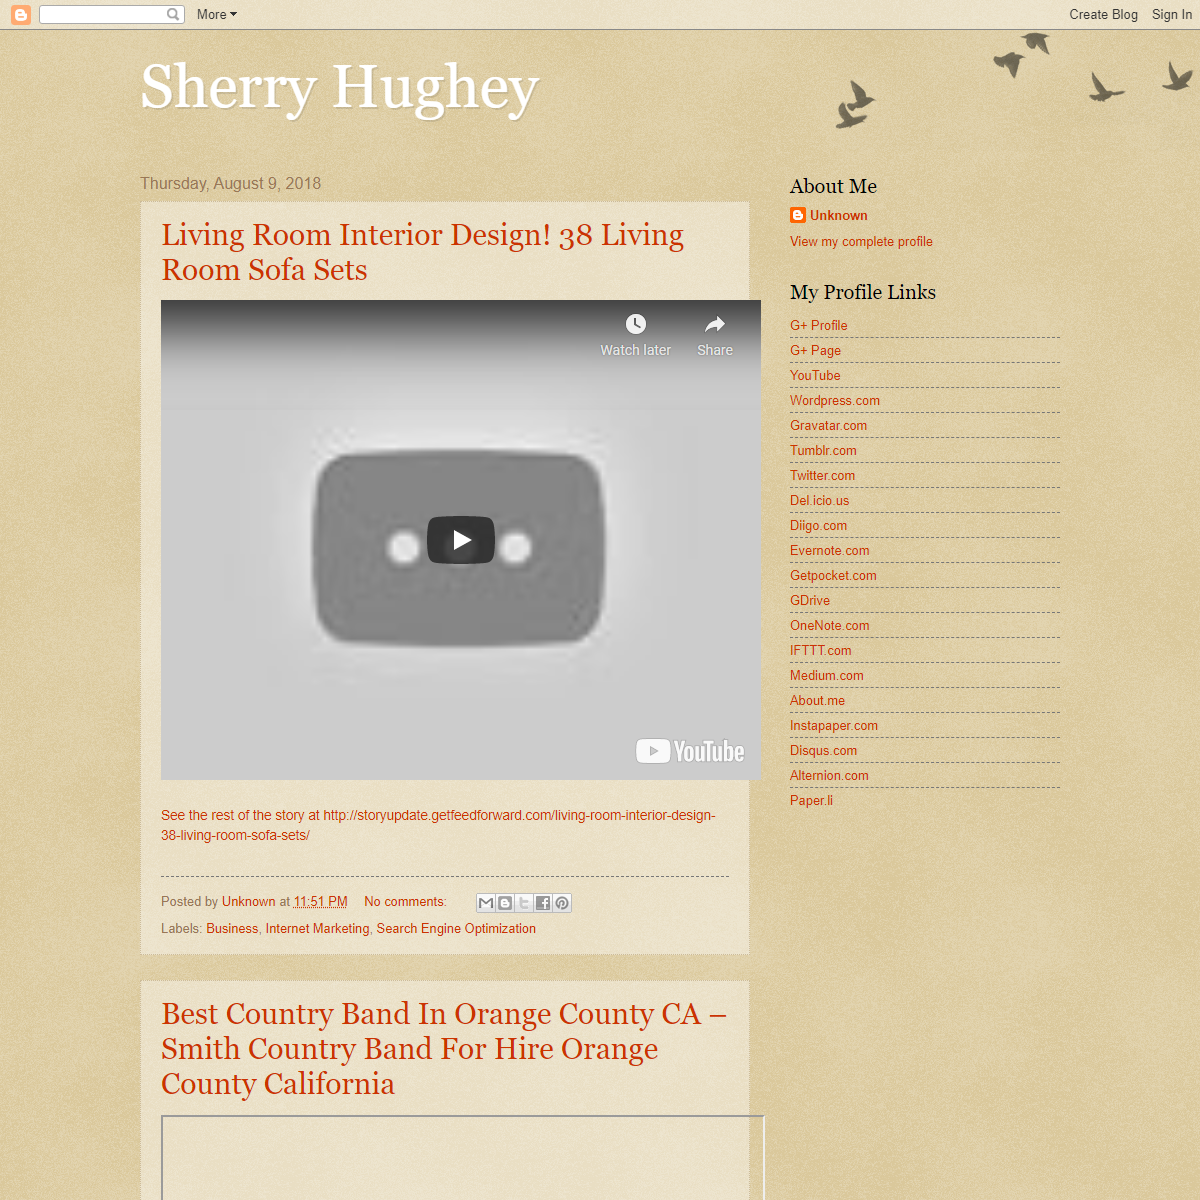 A complete backup of https://sherryjhughey.blogspot.com/